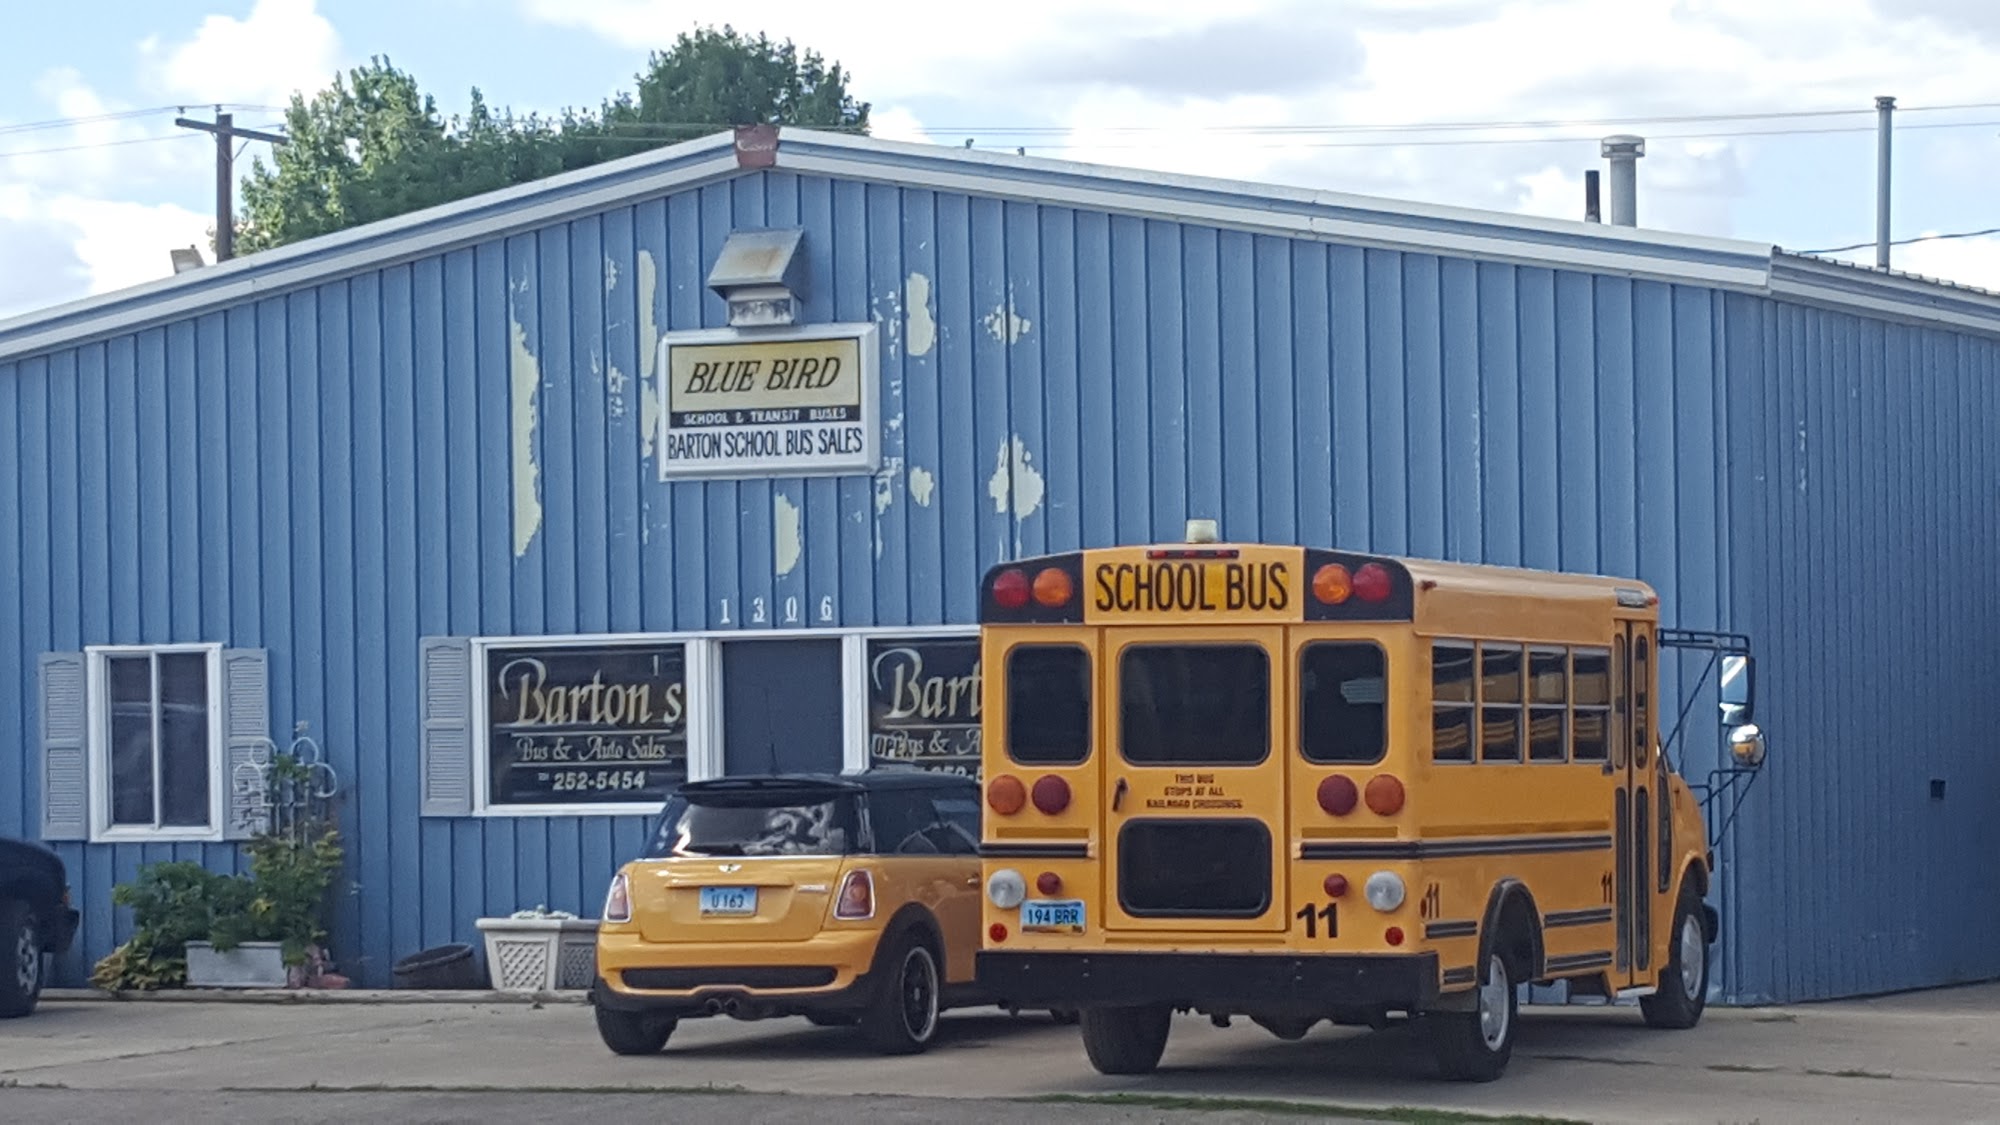 Barton's Bus and Auto Sales